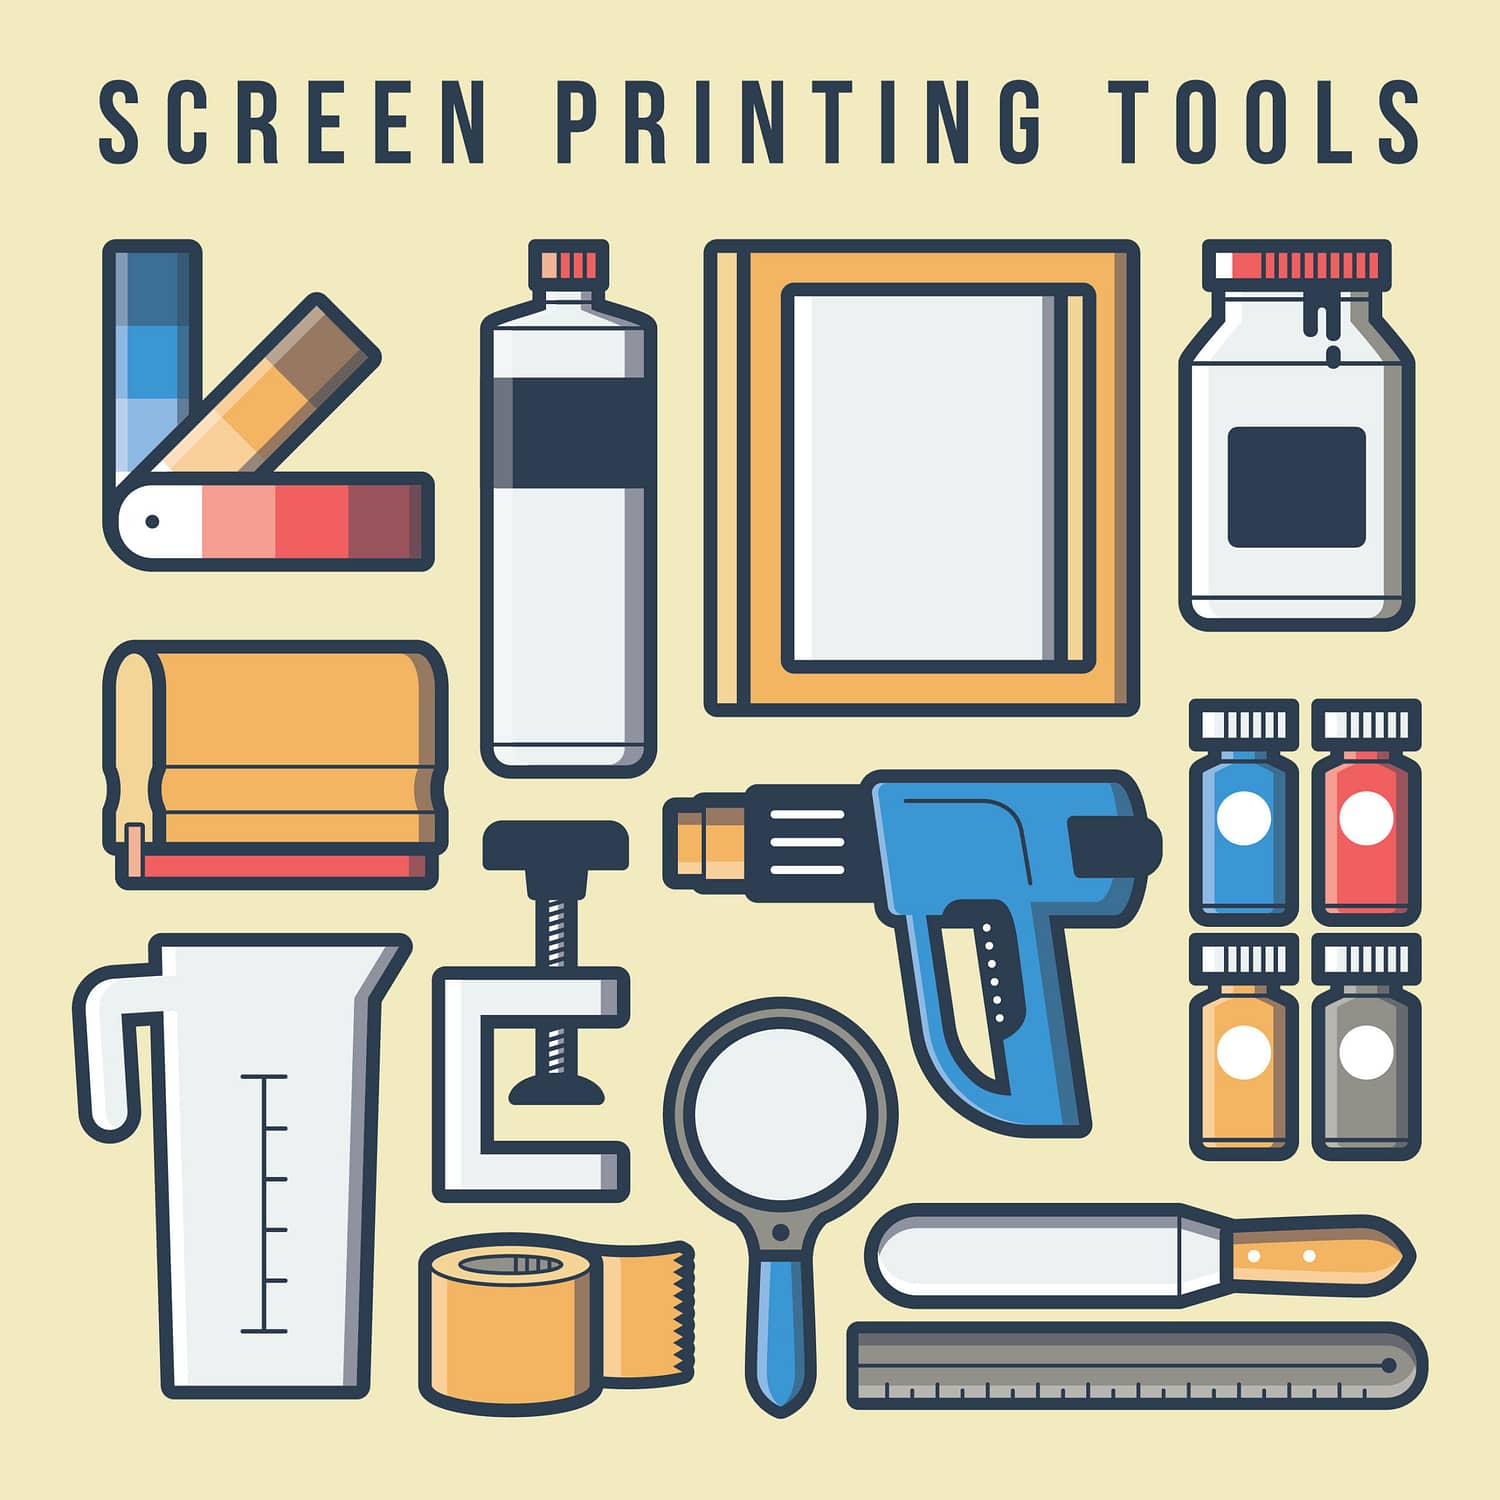 Screen printing tools